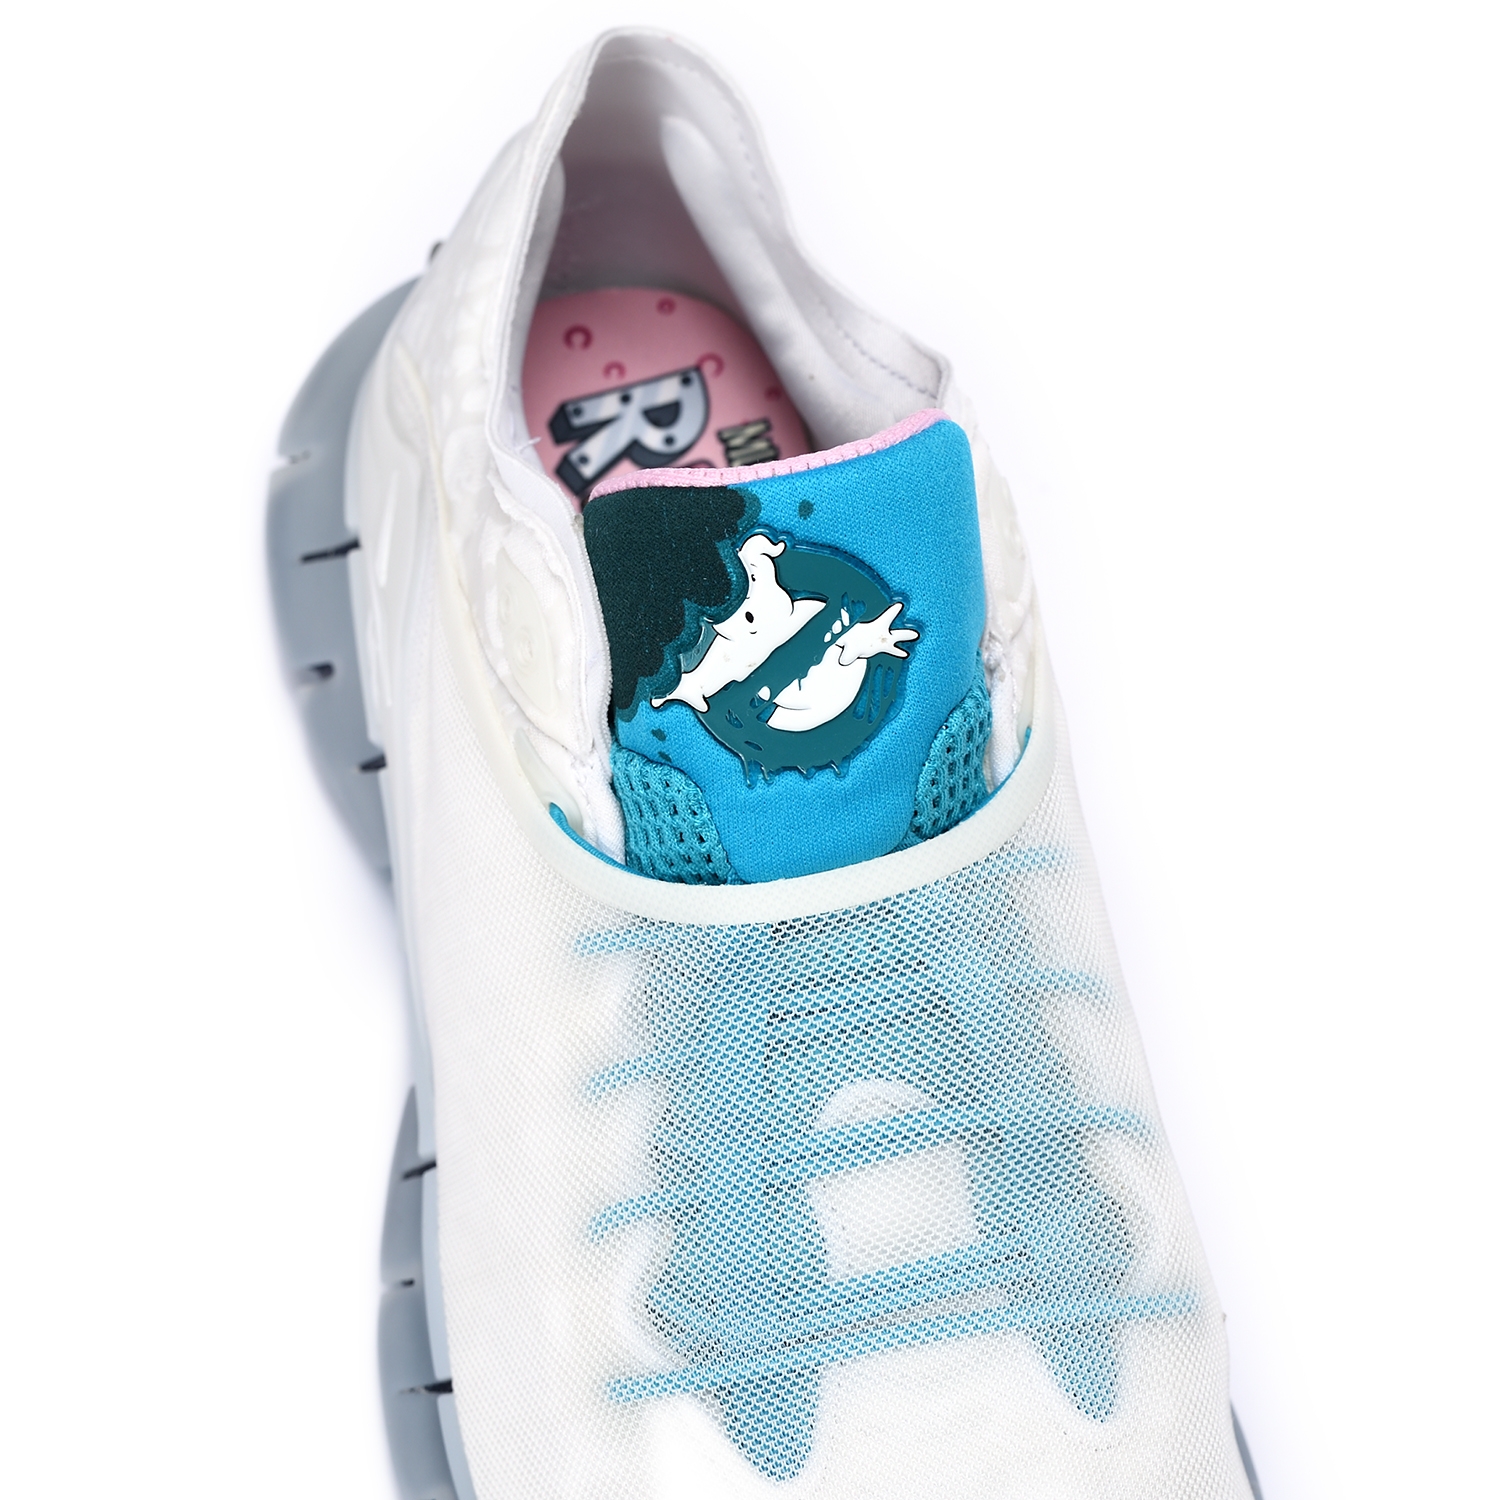 Reebok Ghostbusters Zig Kinetica Shoes White / Feather Blue / Silver Met.